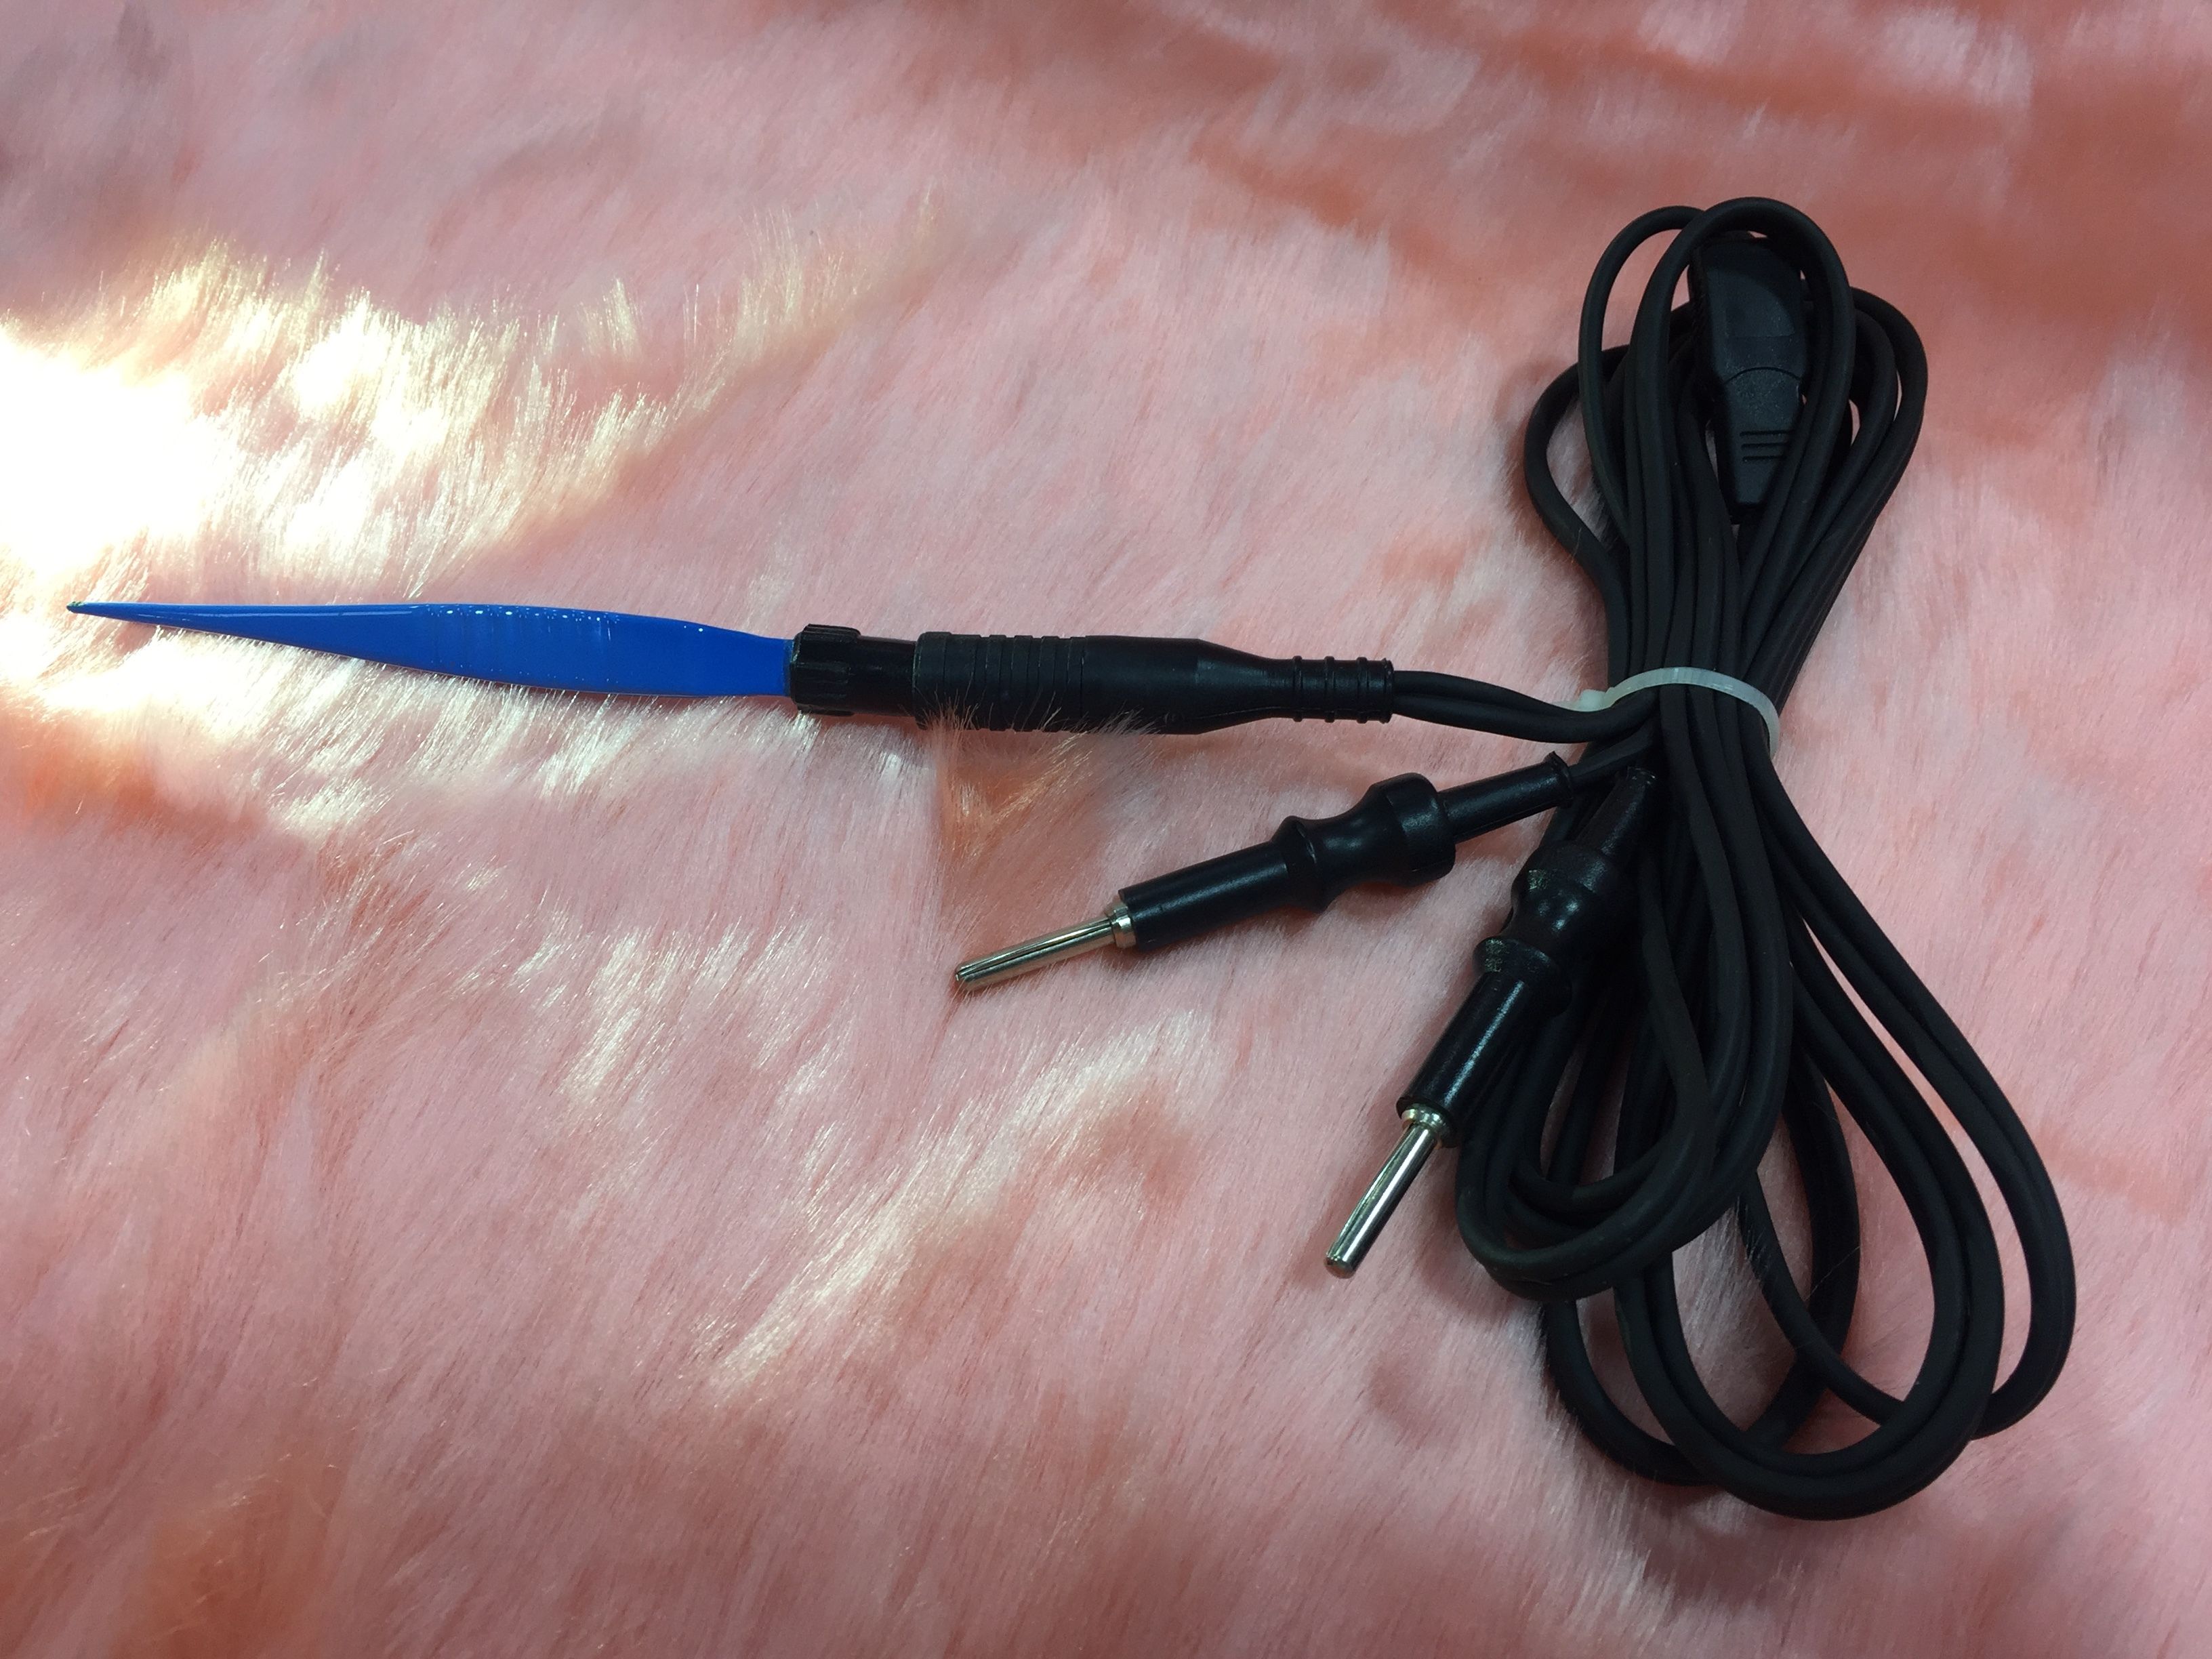 Bipolar Cable Cord(black)